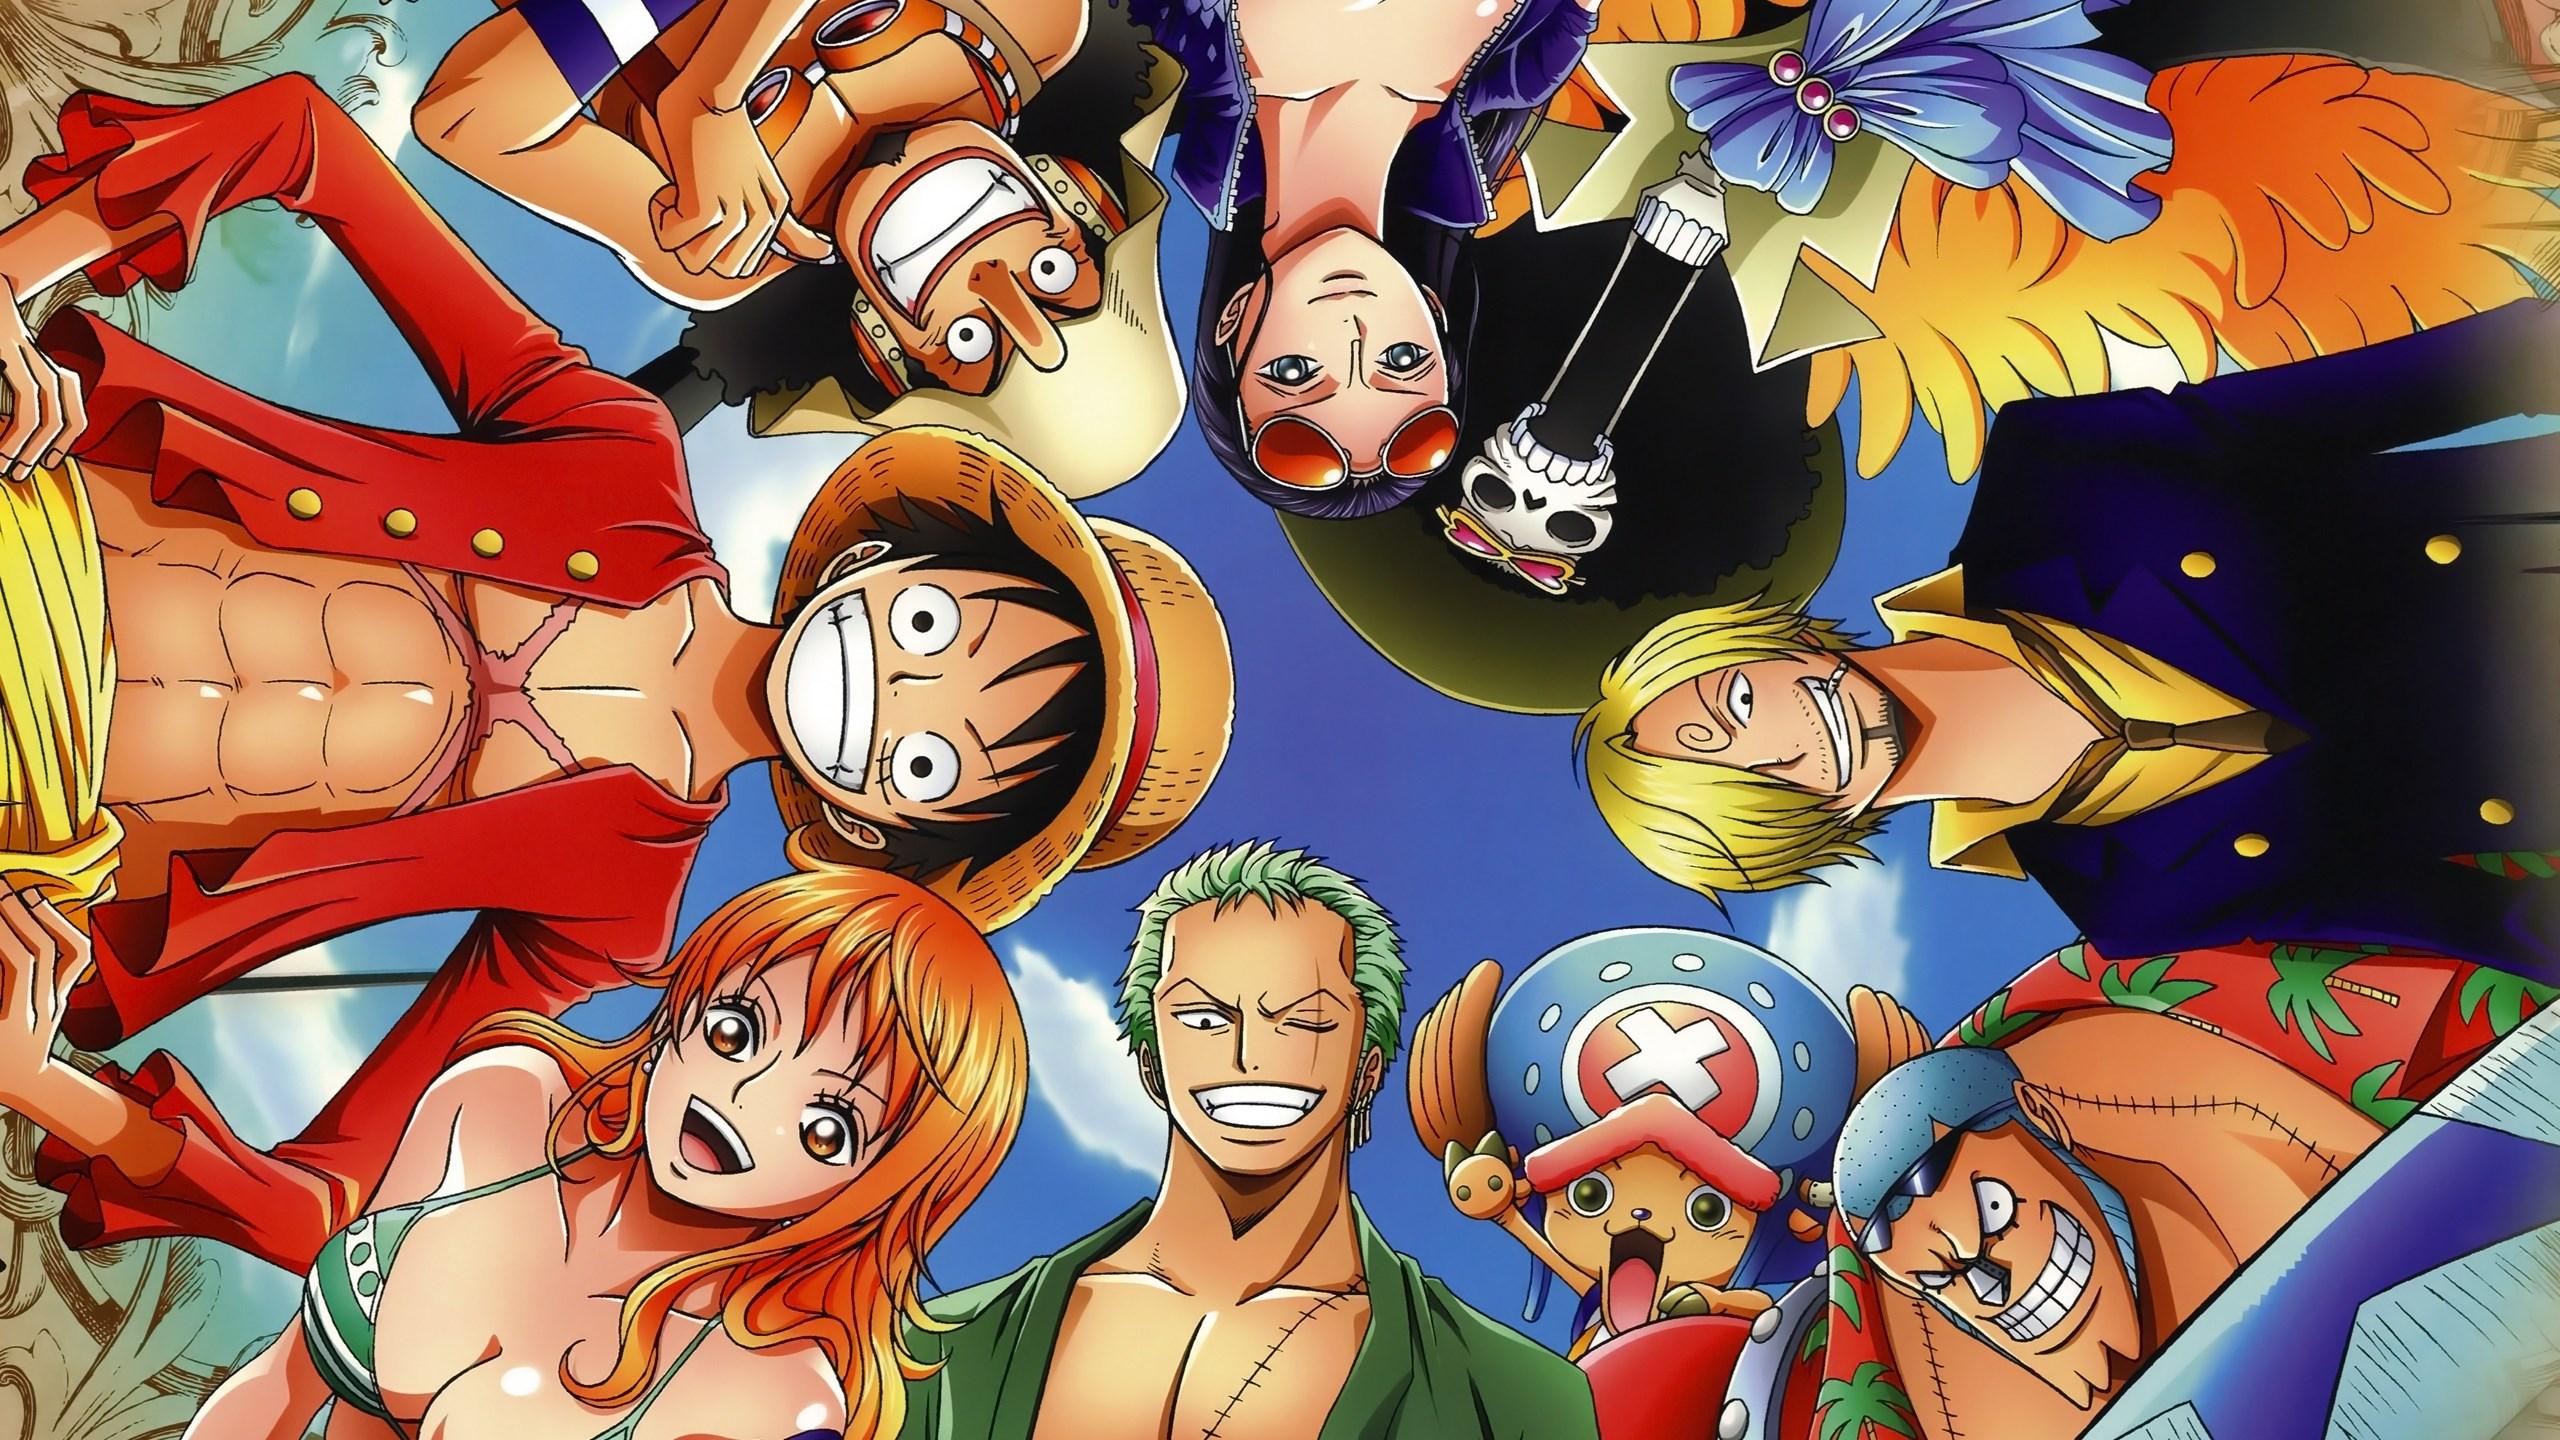 Anime One Piece 4k Ultra HD Wallpaper by JabamiSora